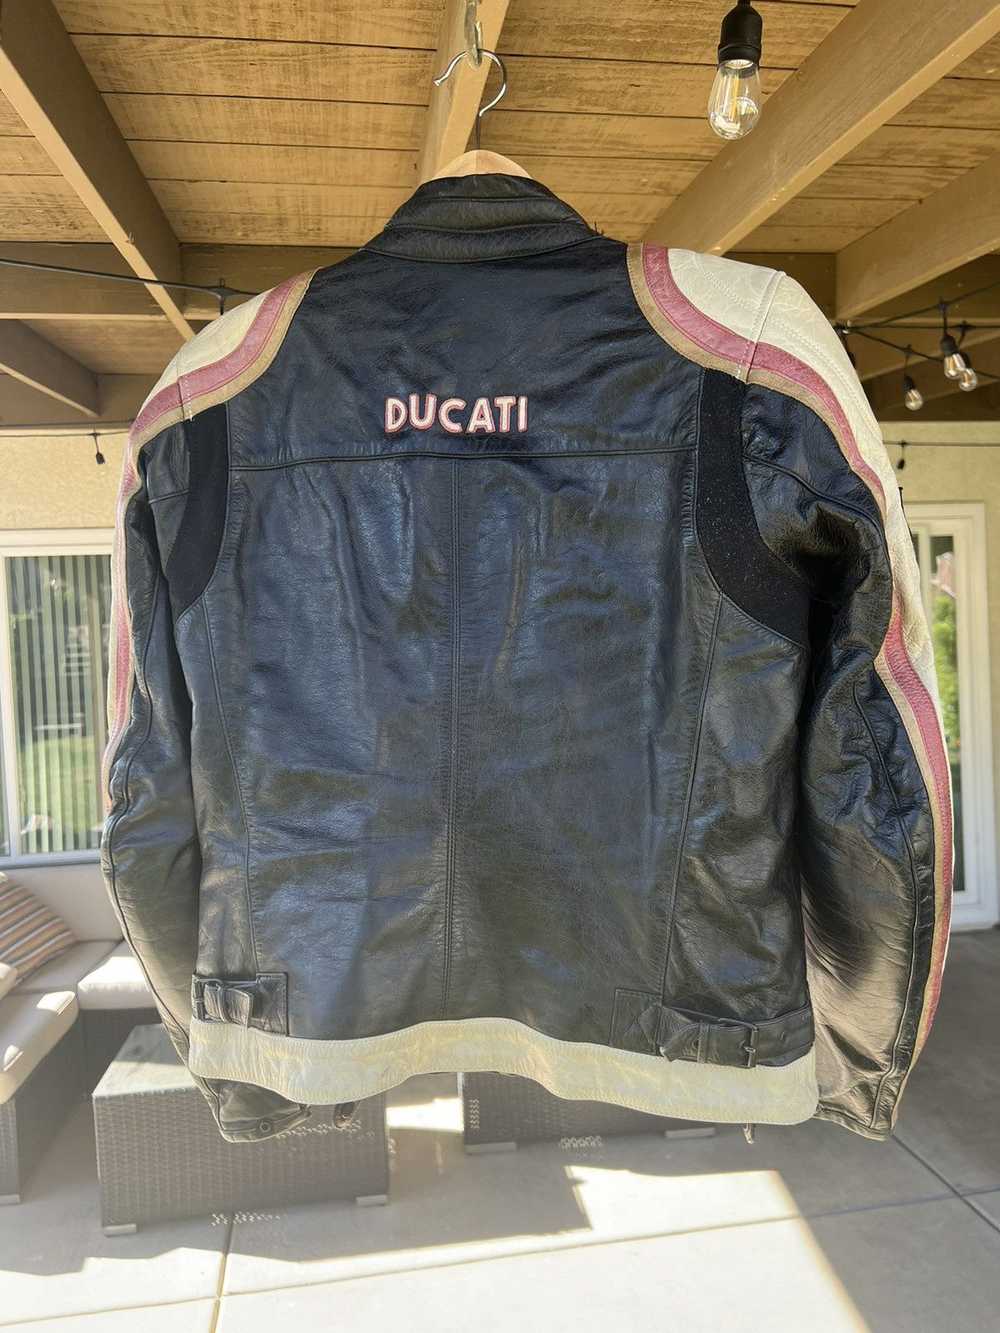 Ducati Ducati Old Times leather moto jacket - image 6